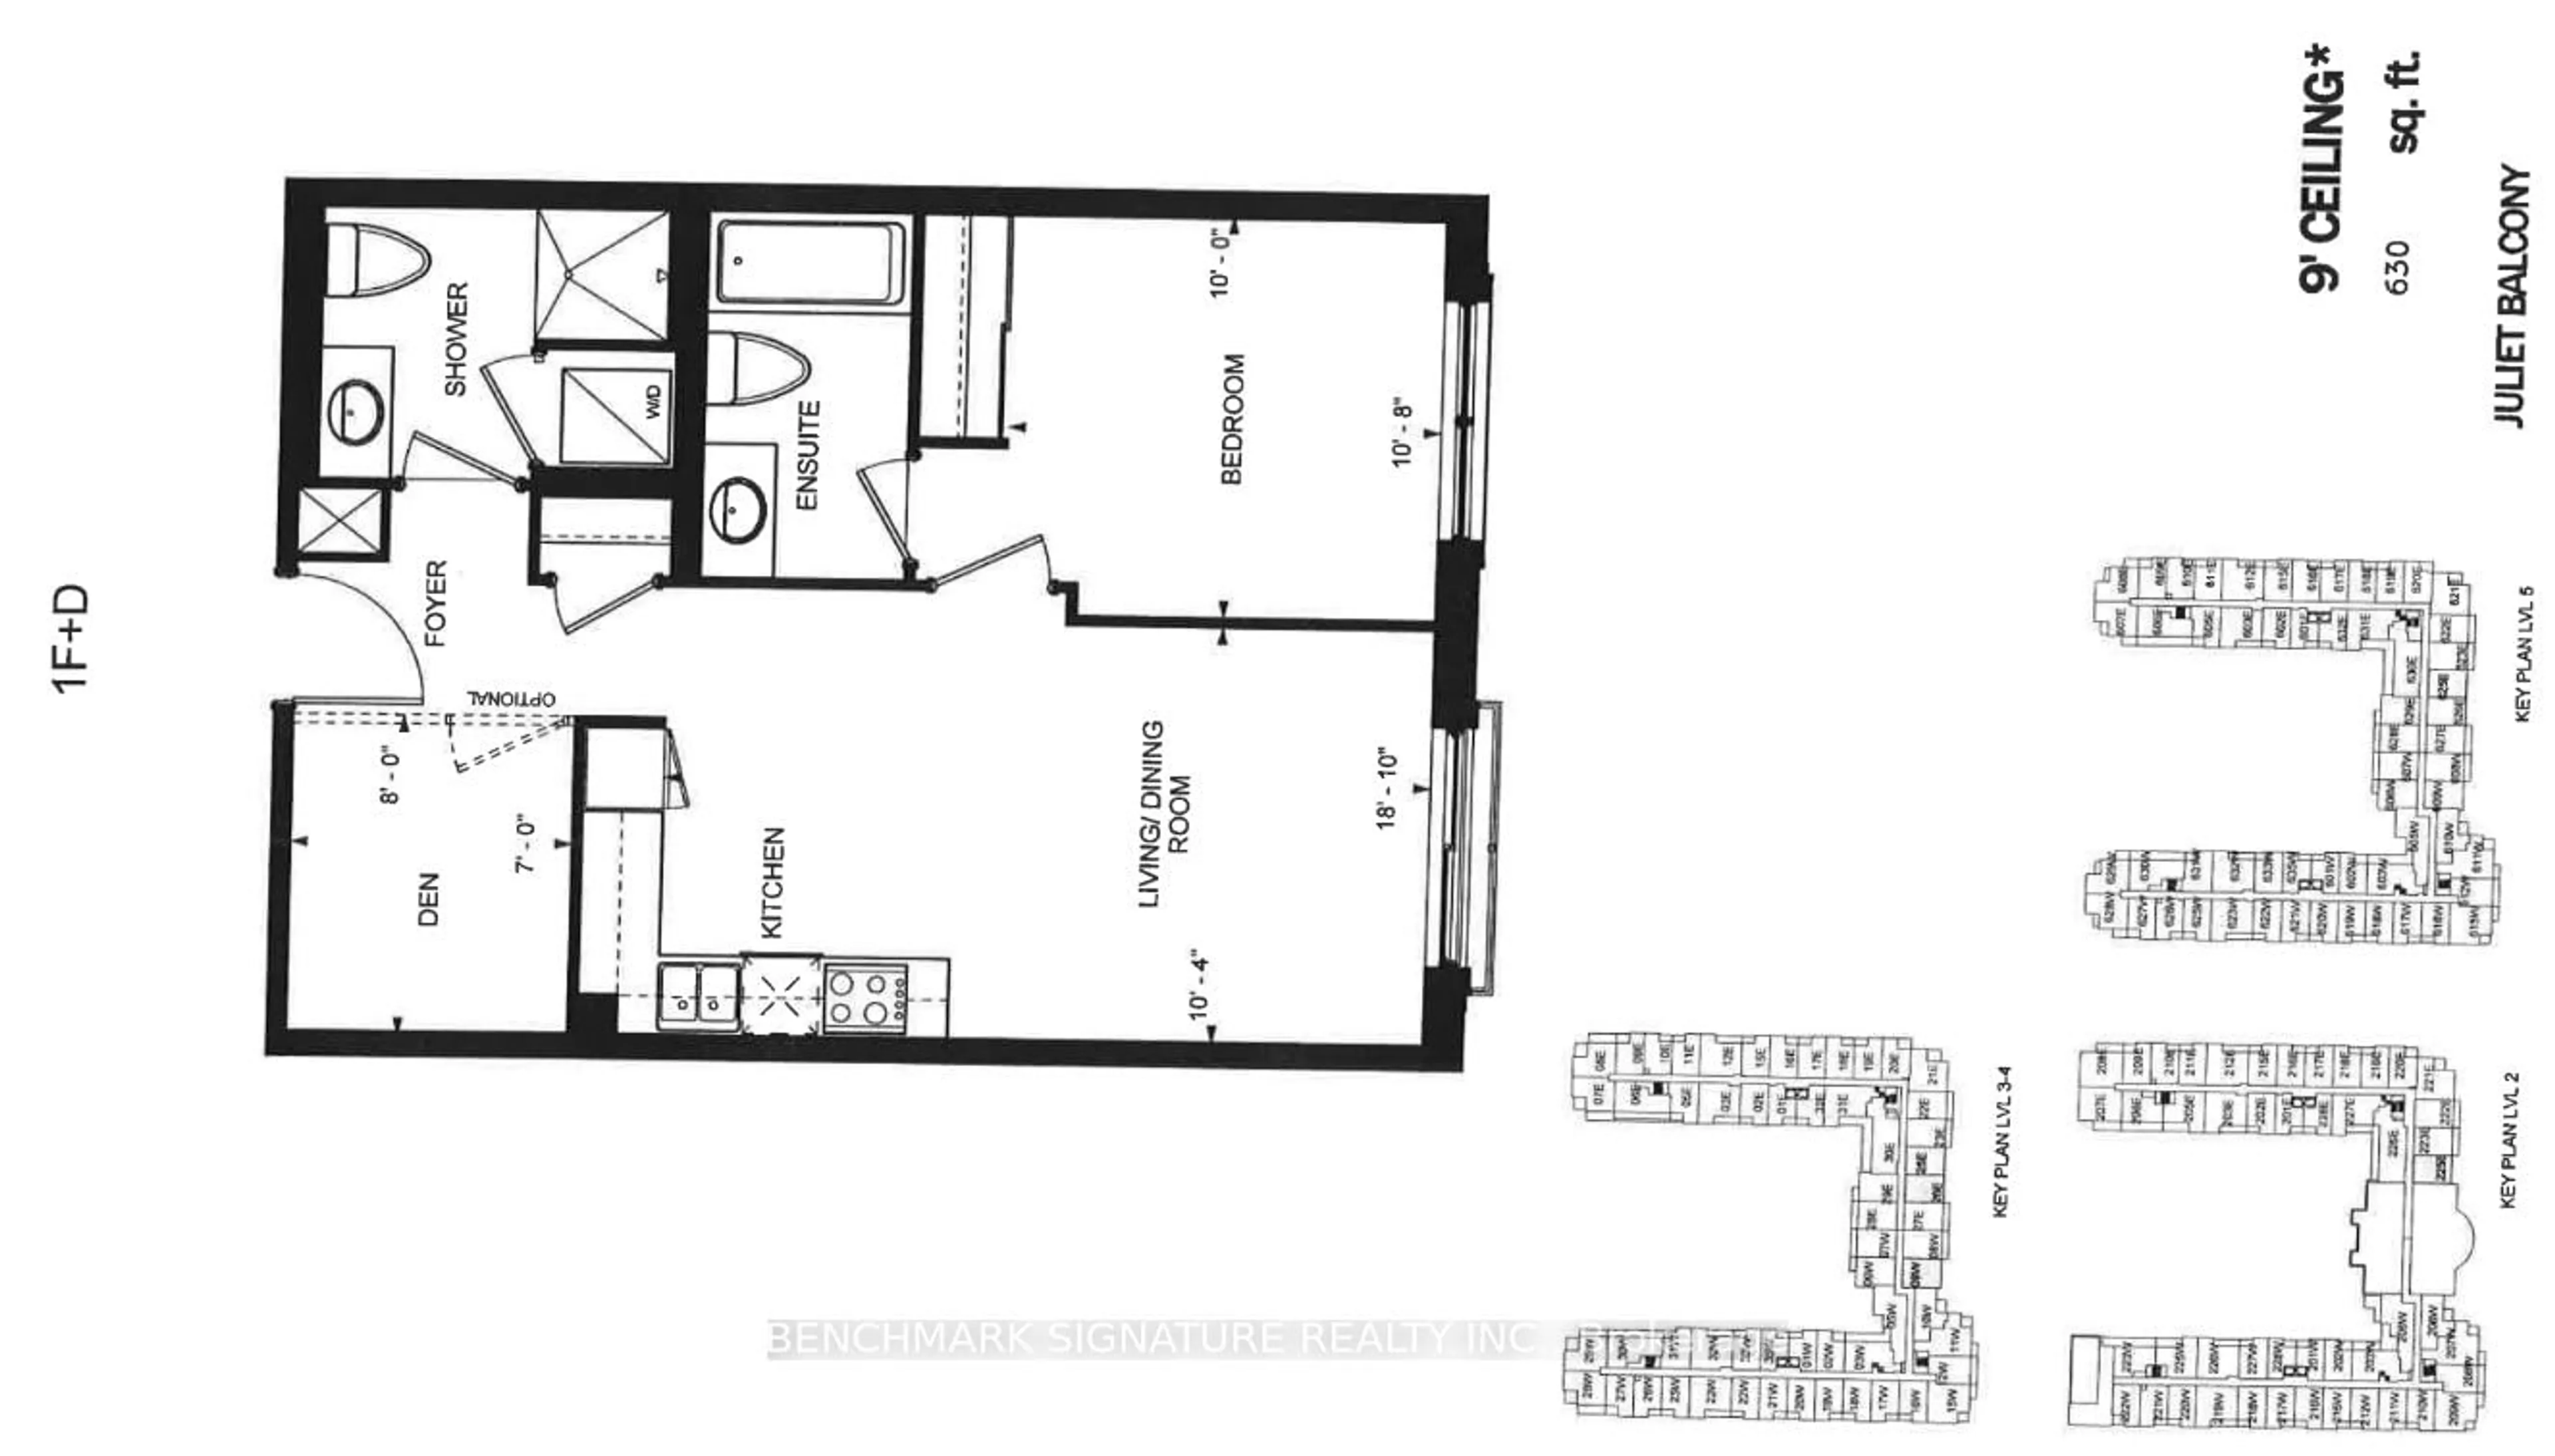 Floor plan for 278 Buchanan Dr #525E, Markham Ontario L3R 9S3